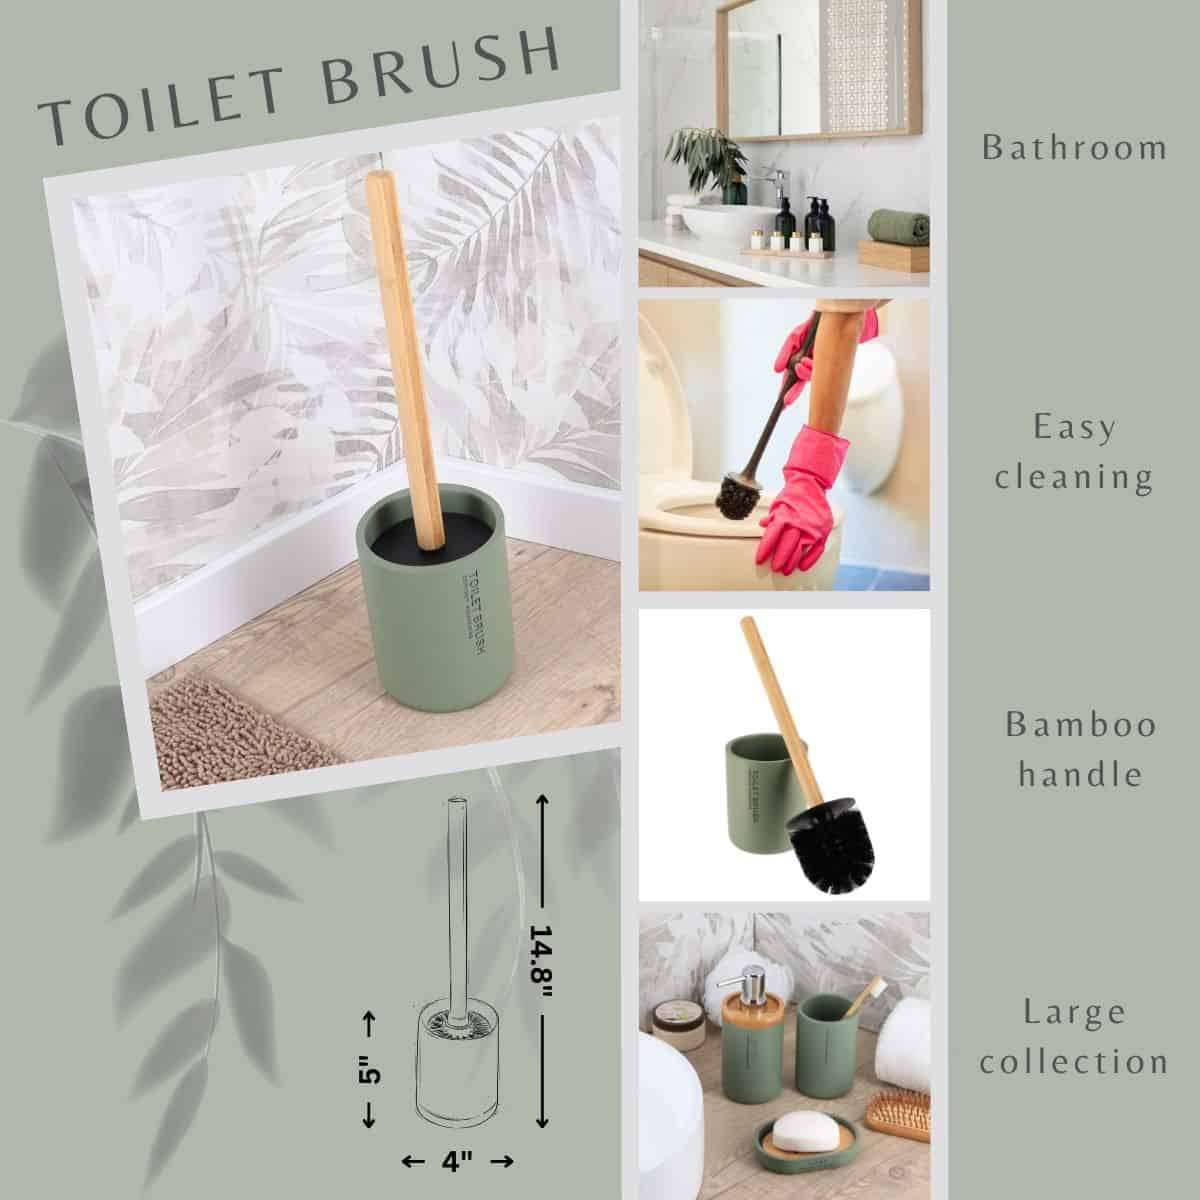 Versatile wooden olive green toilet brush and holder set for bathroom restroom easy cleaning